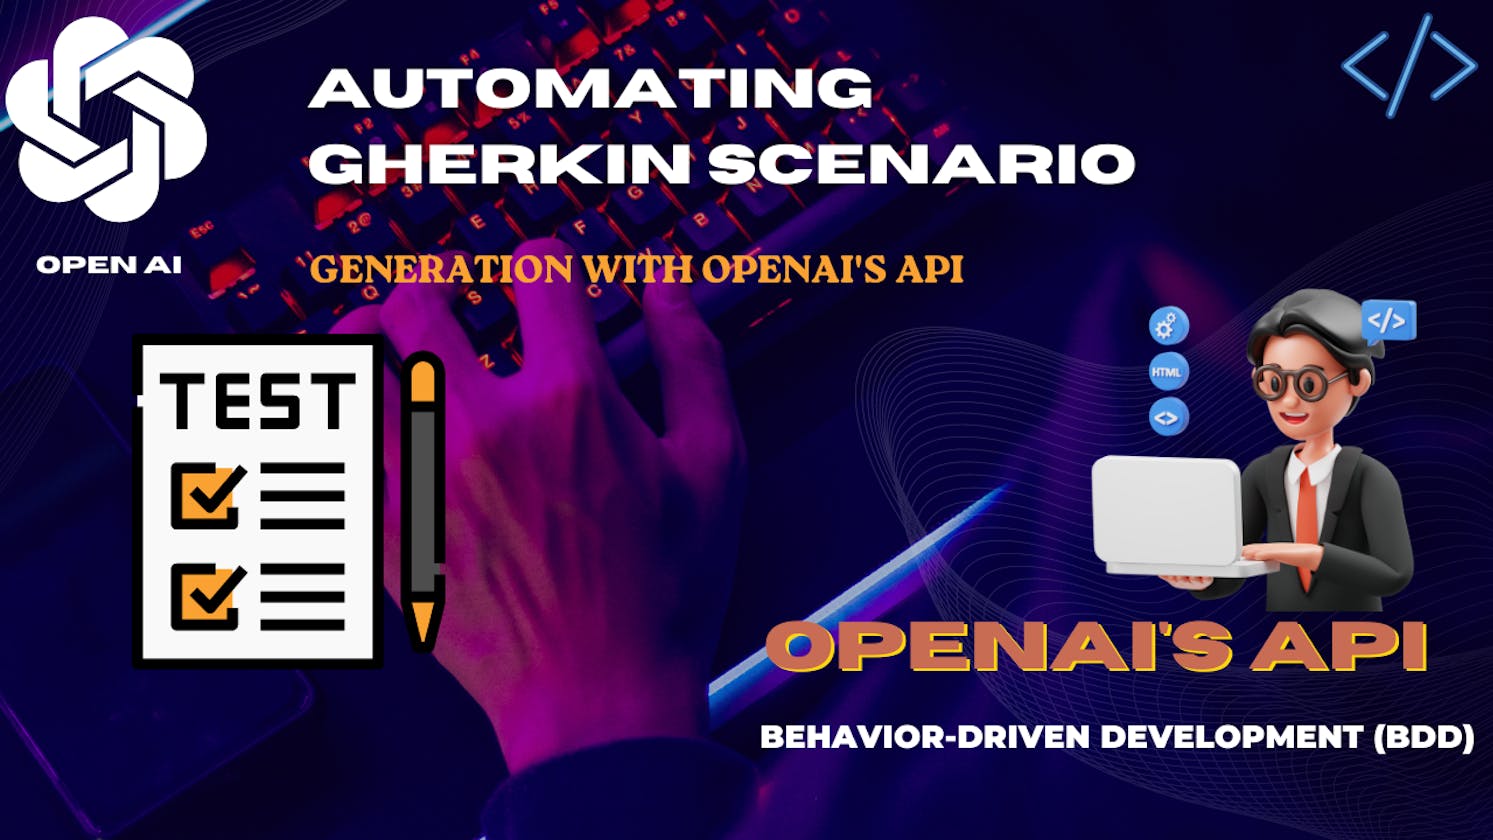 Automating Gherkin Scenario Generation with OpenAI's API